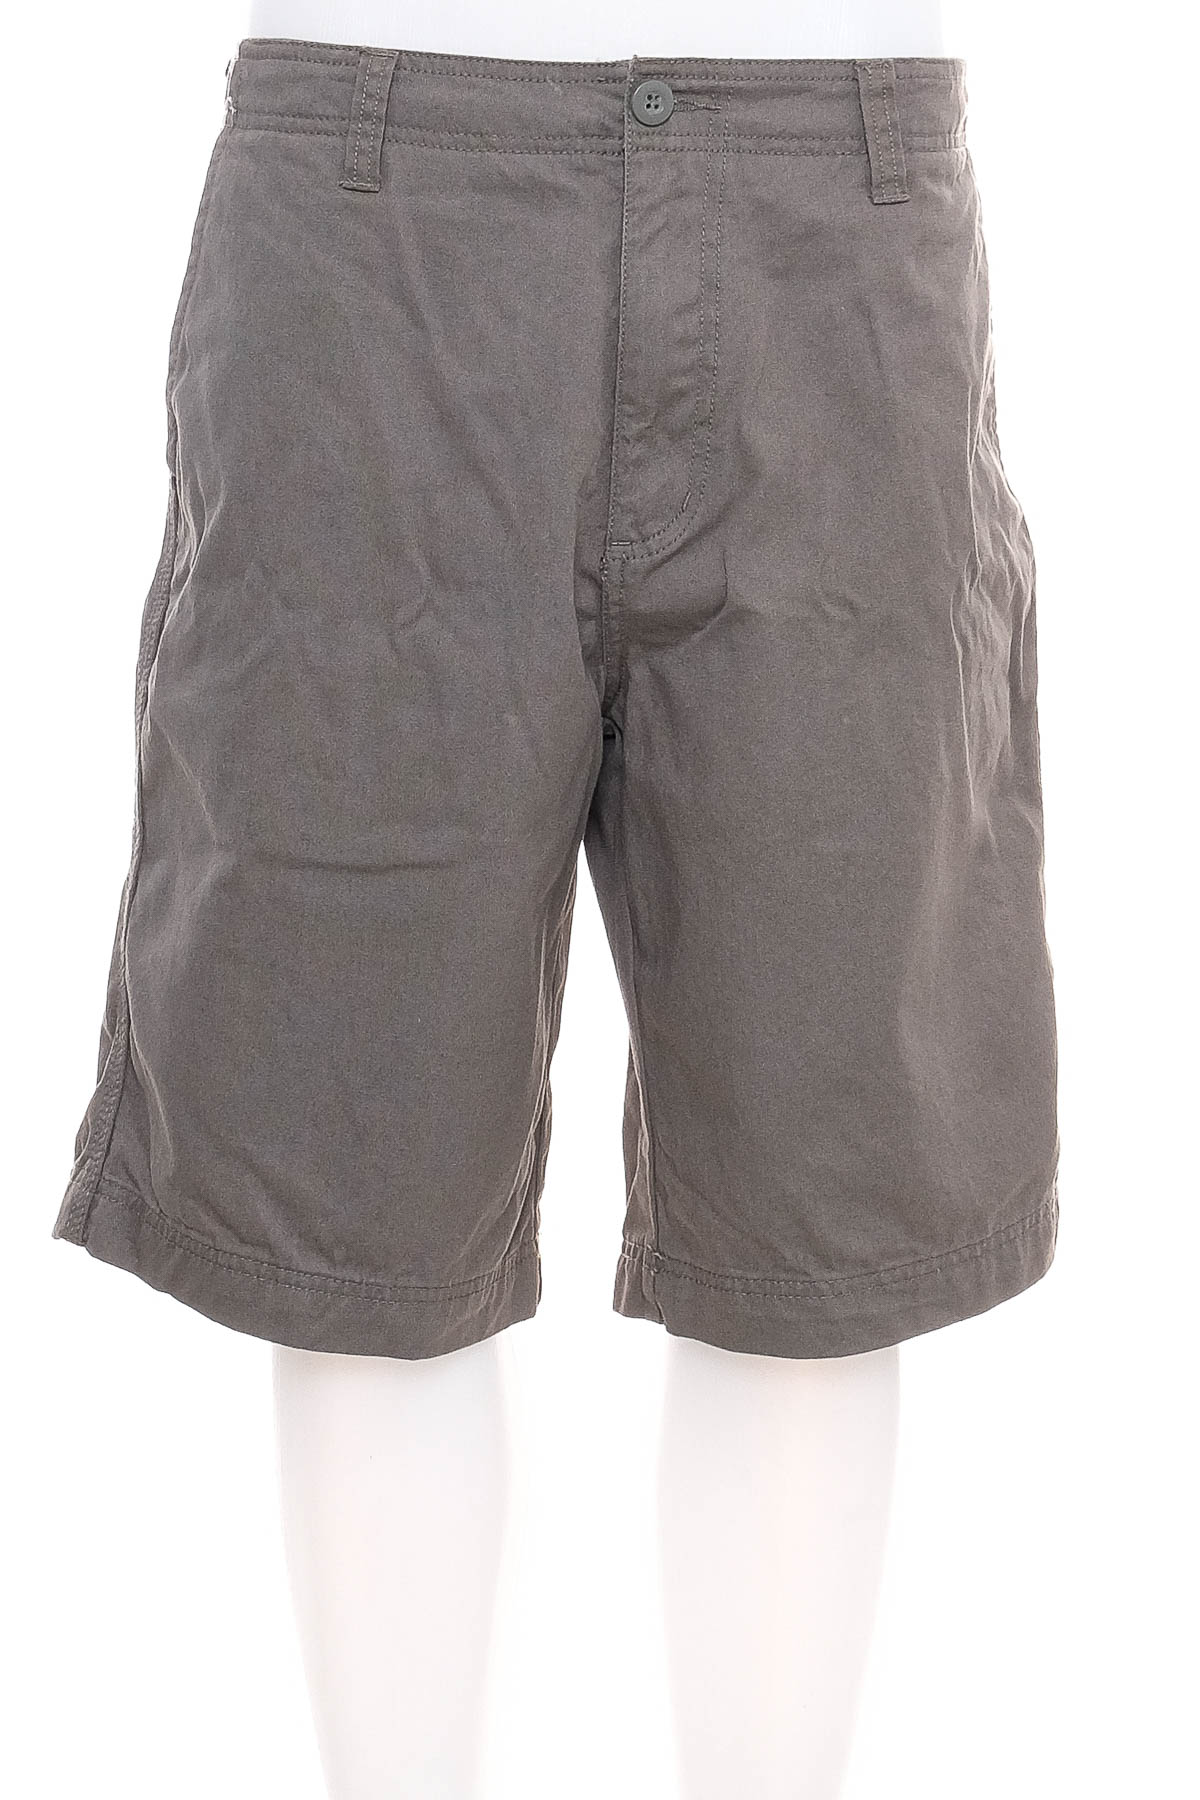 Men's shorts - Denim Co - 0